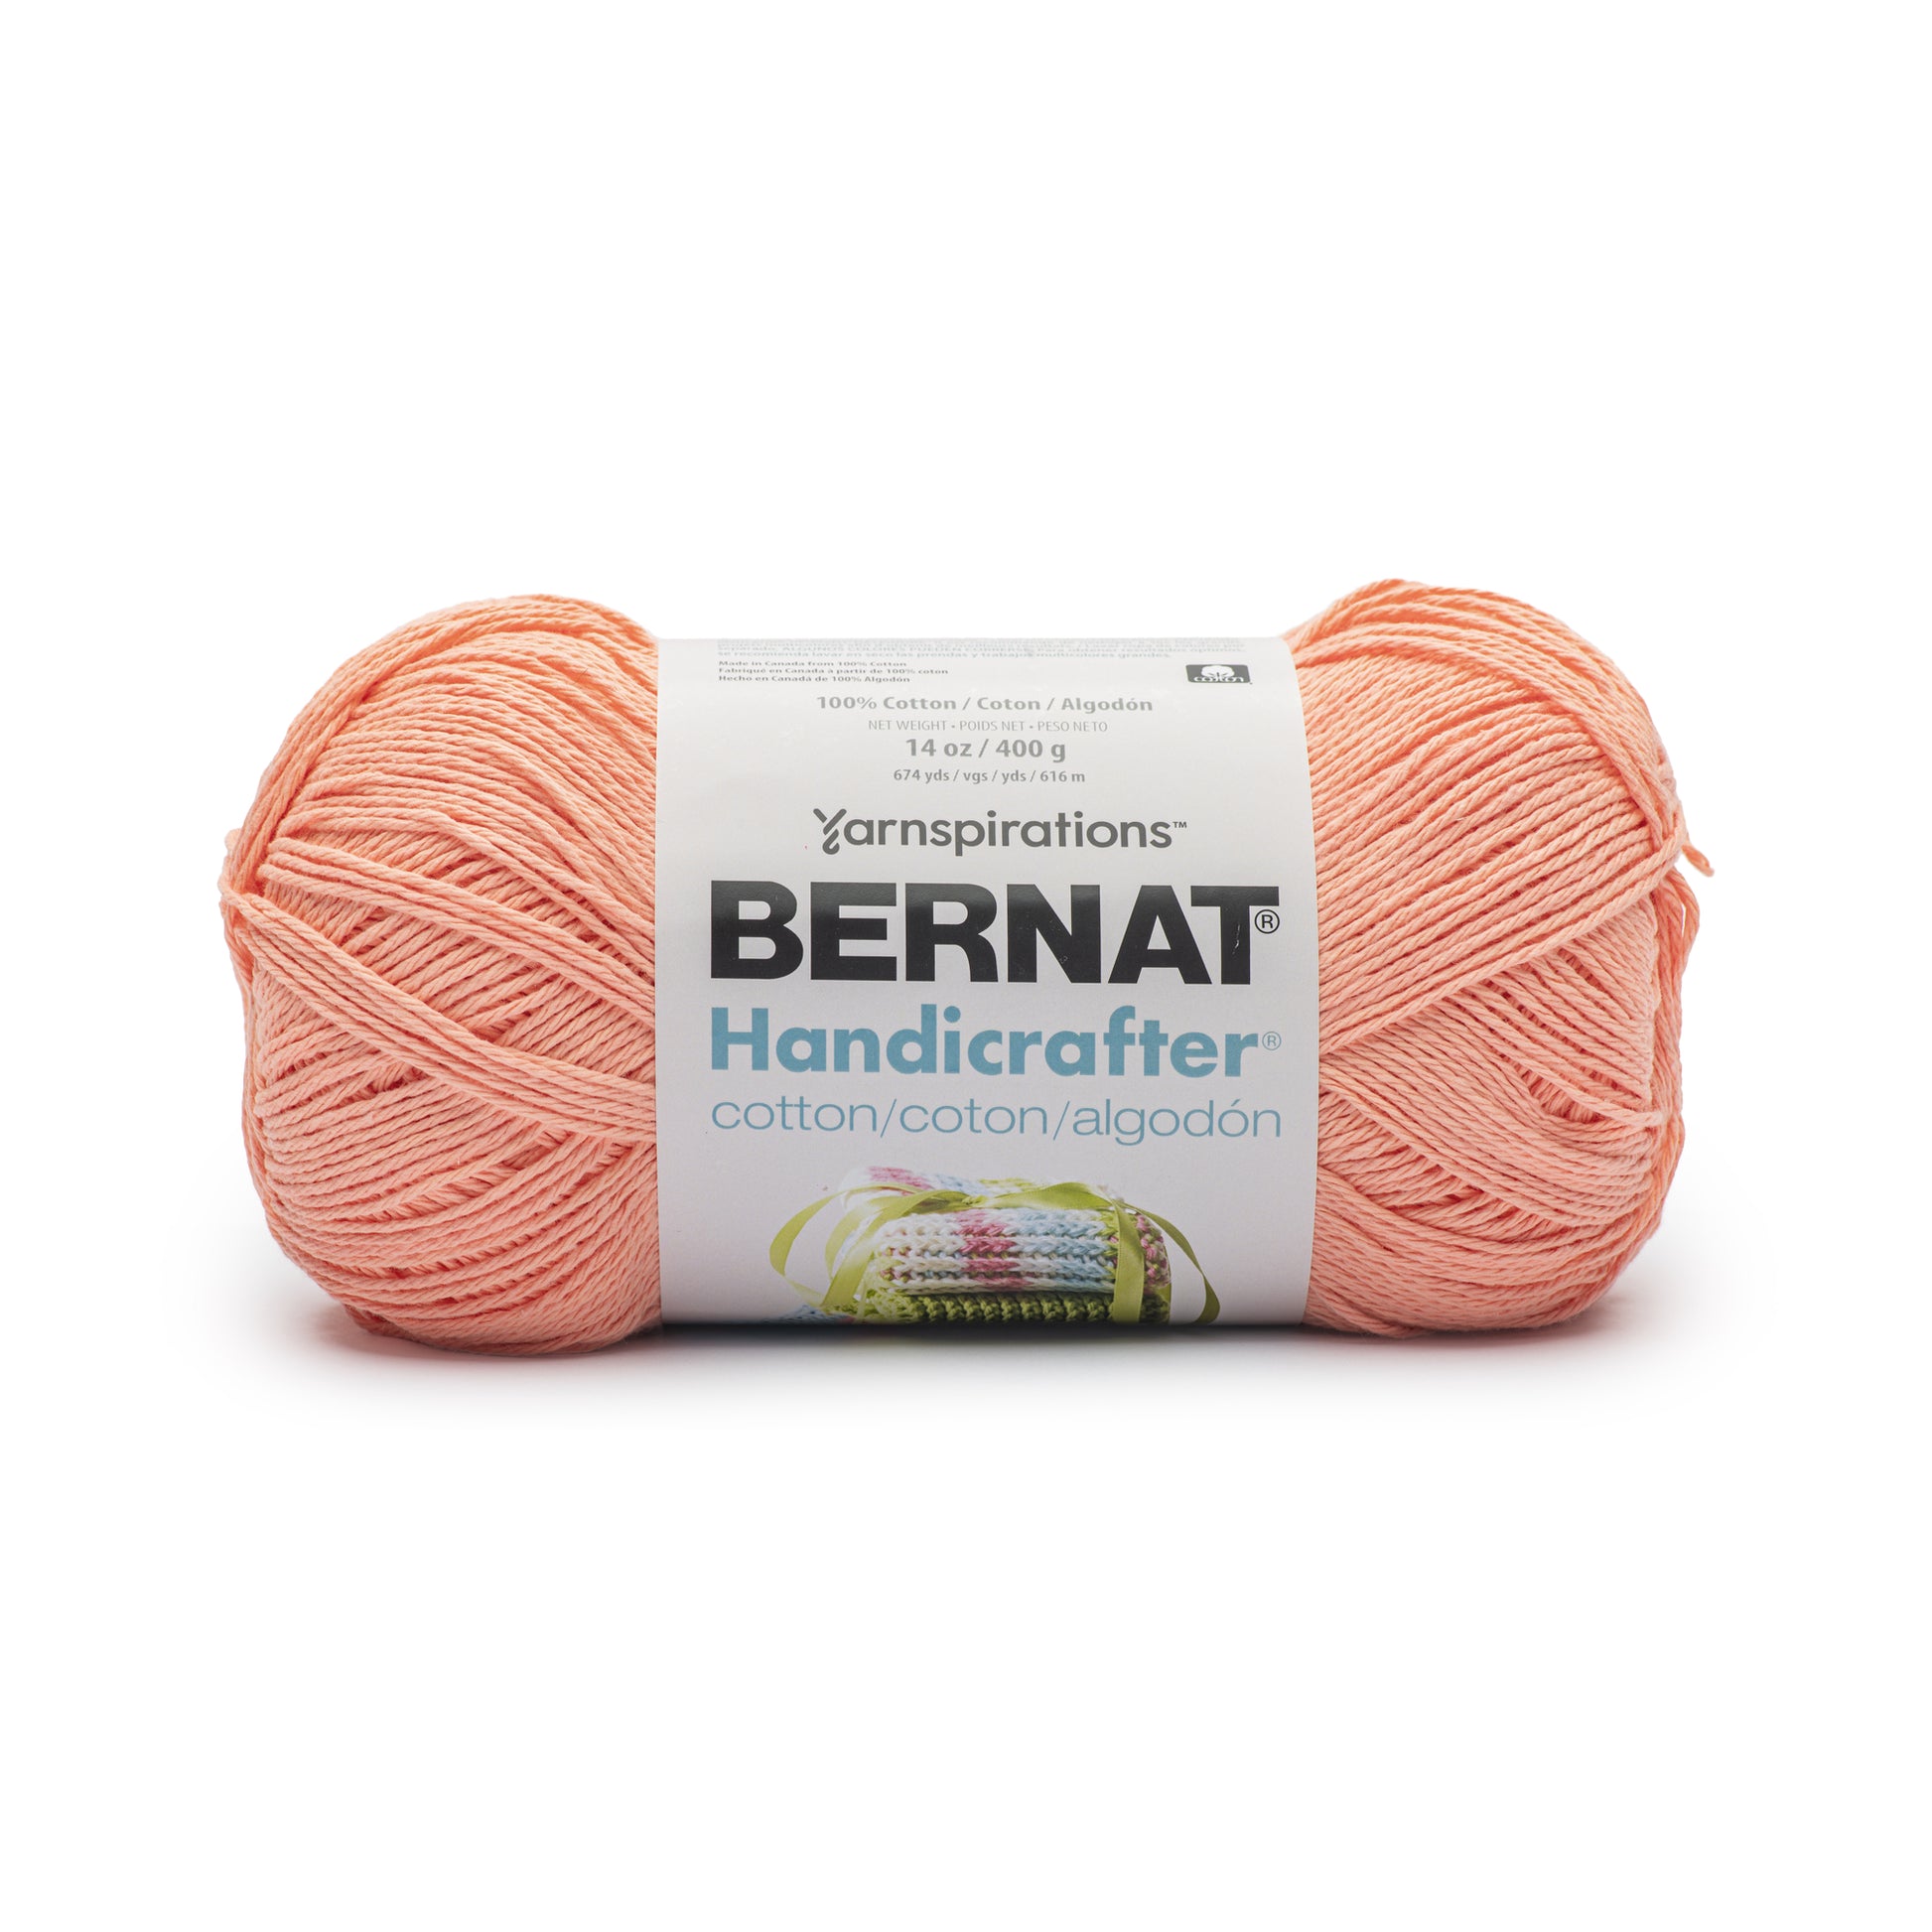 Bernat Handicrafter Cotton Yarn (400g/14oz) Tea Rose